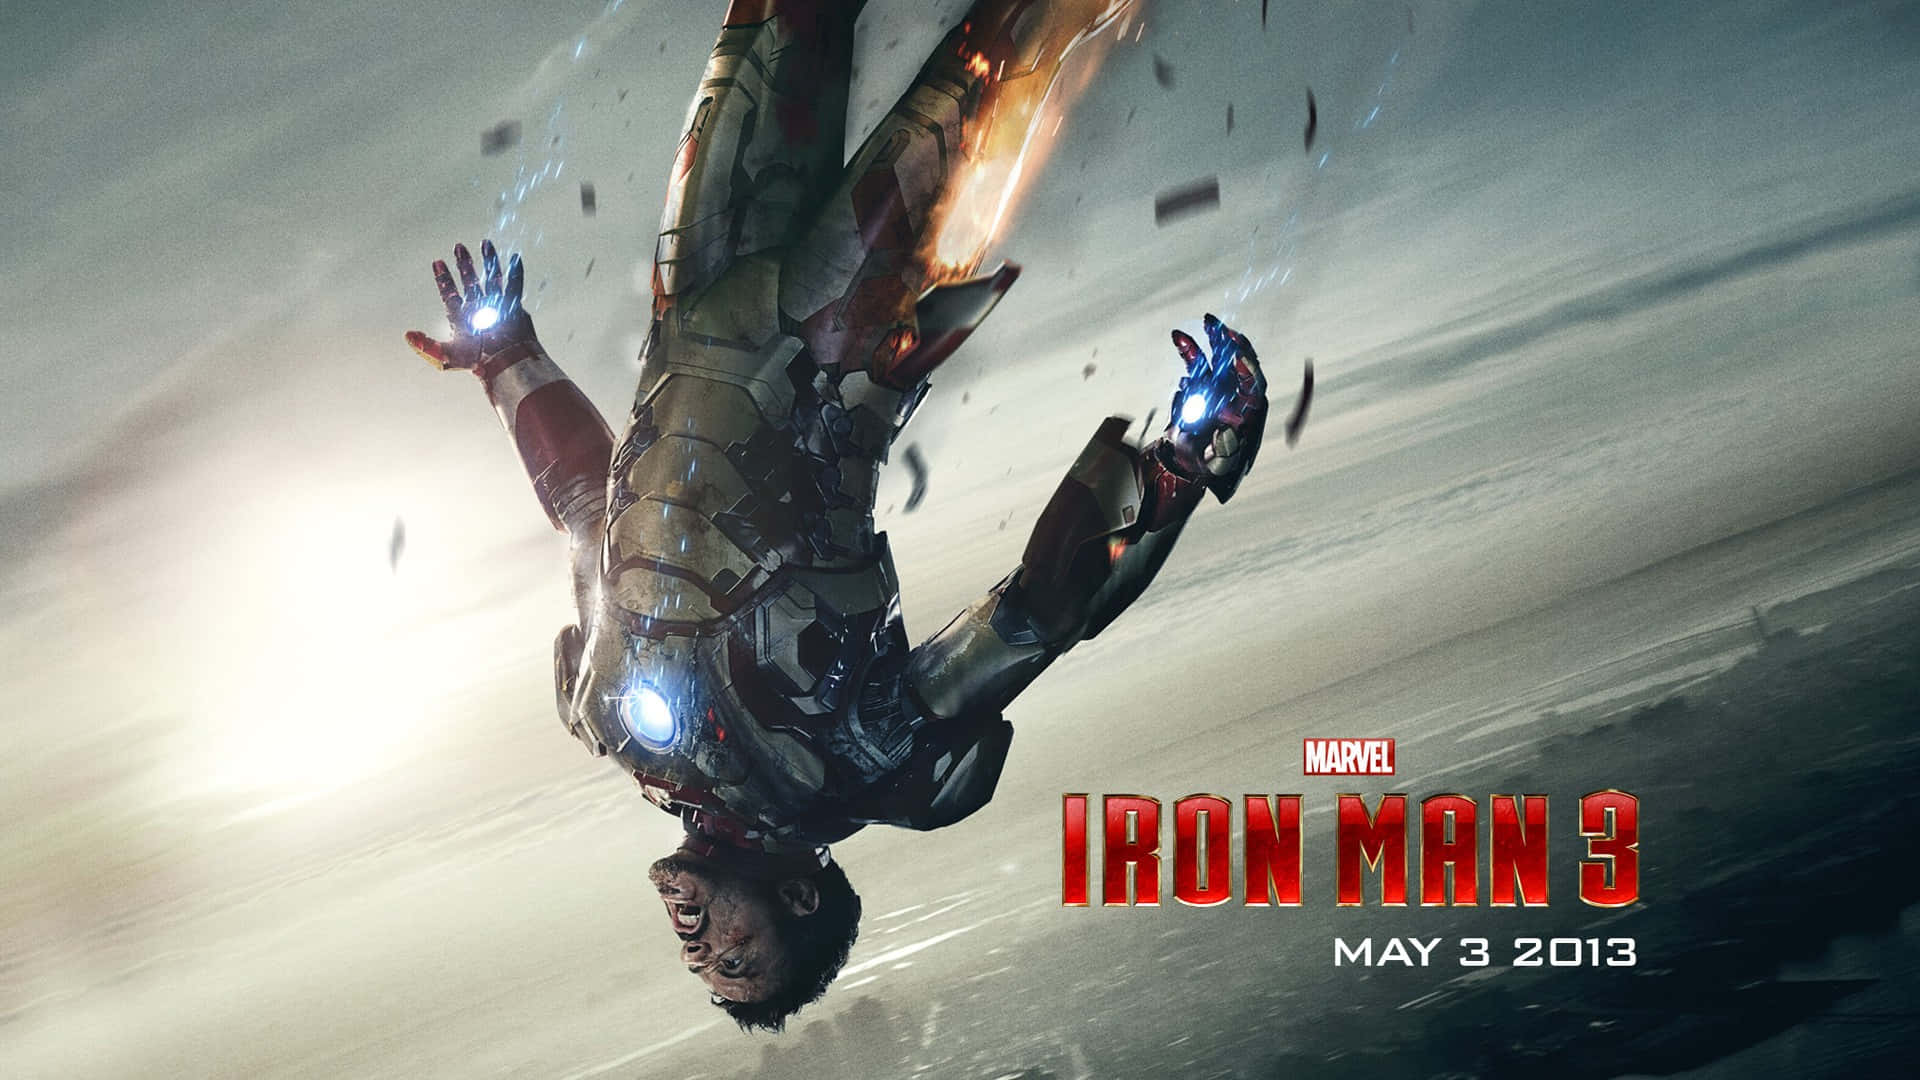 Robert Downey Jr as Iron Man in Iron Man 3 Wallpaper